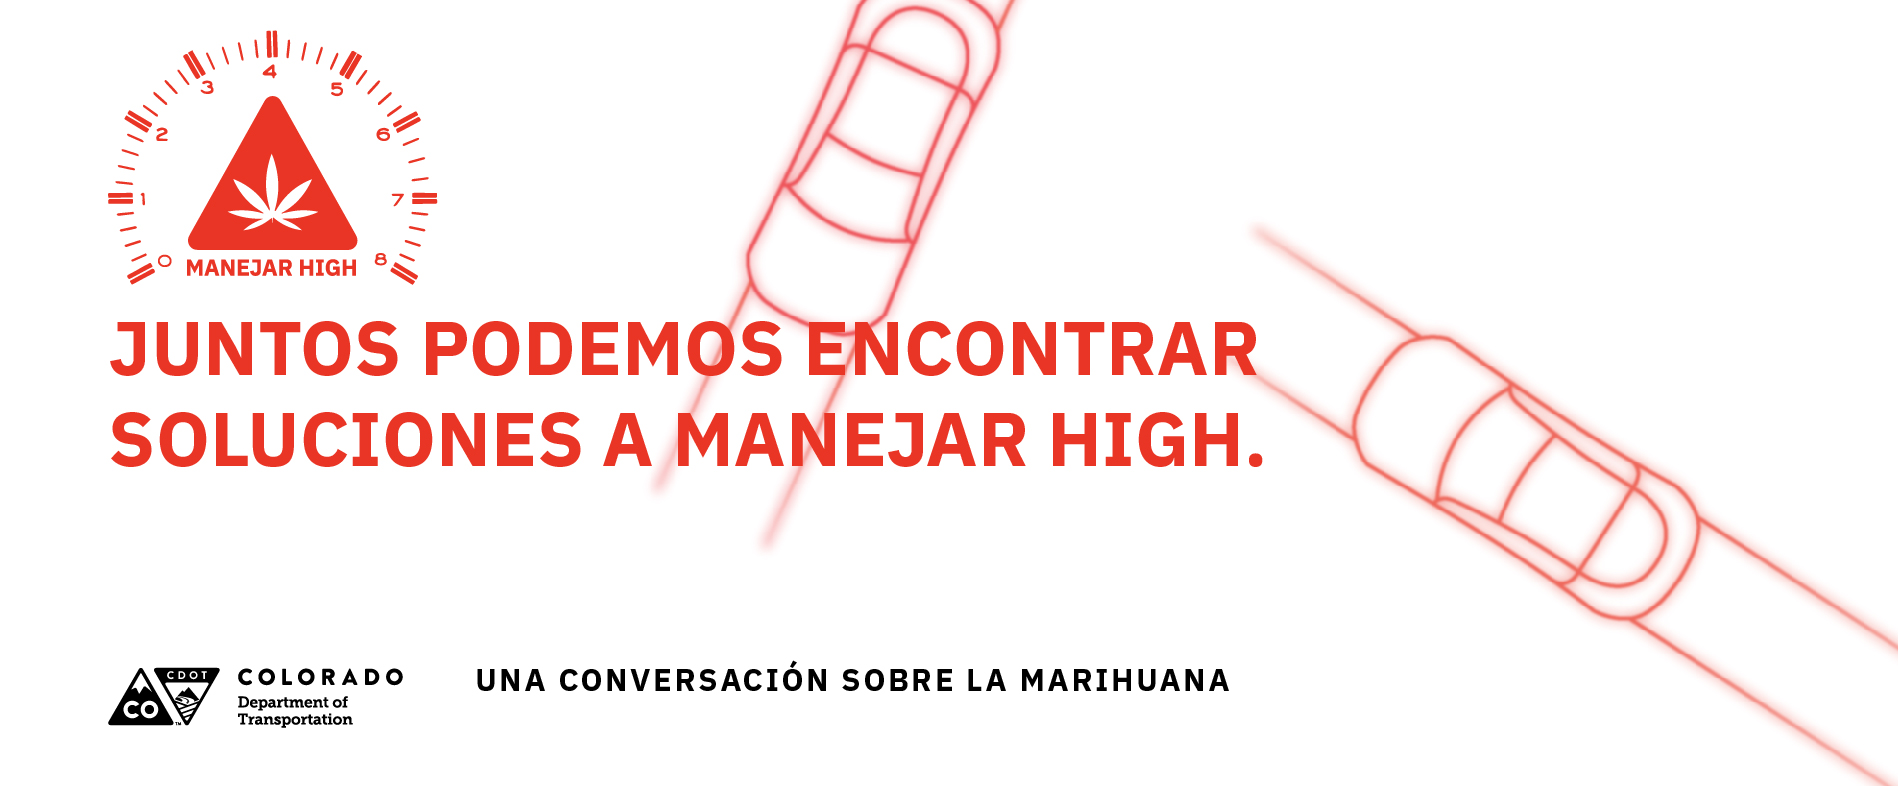 CD038_CannabisConversations_GraphicKit_Mech_v1_Spanish_Horizontal_F.jpg detail image